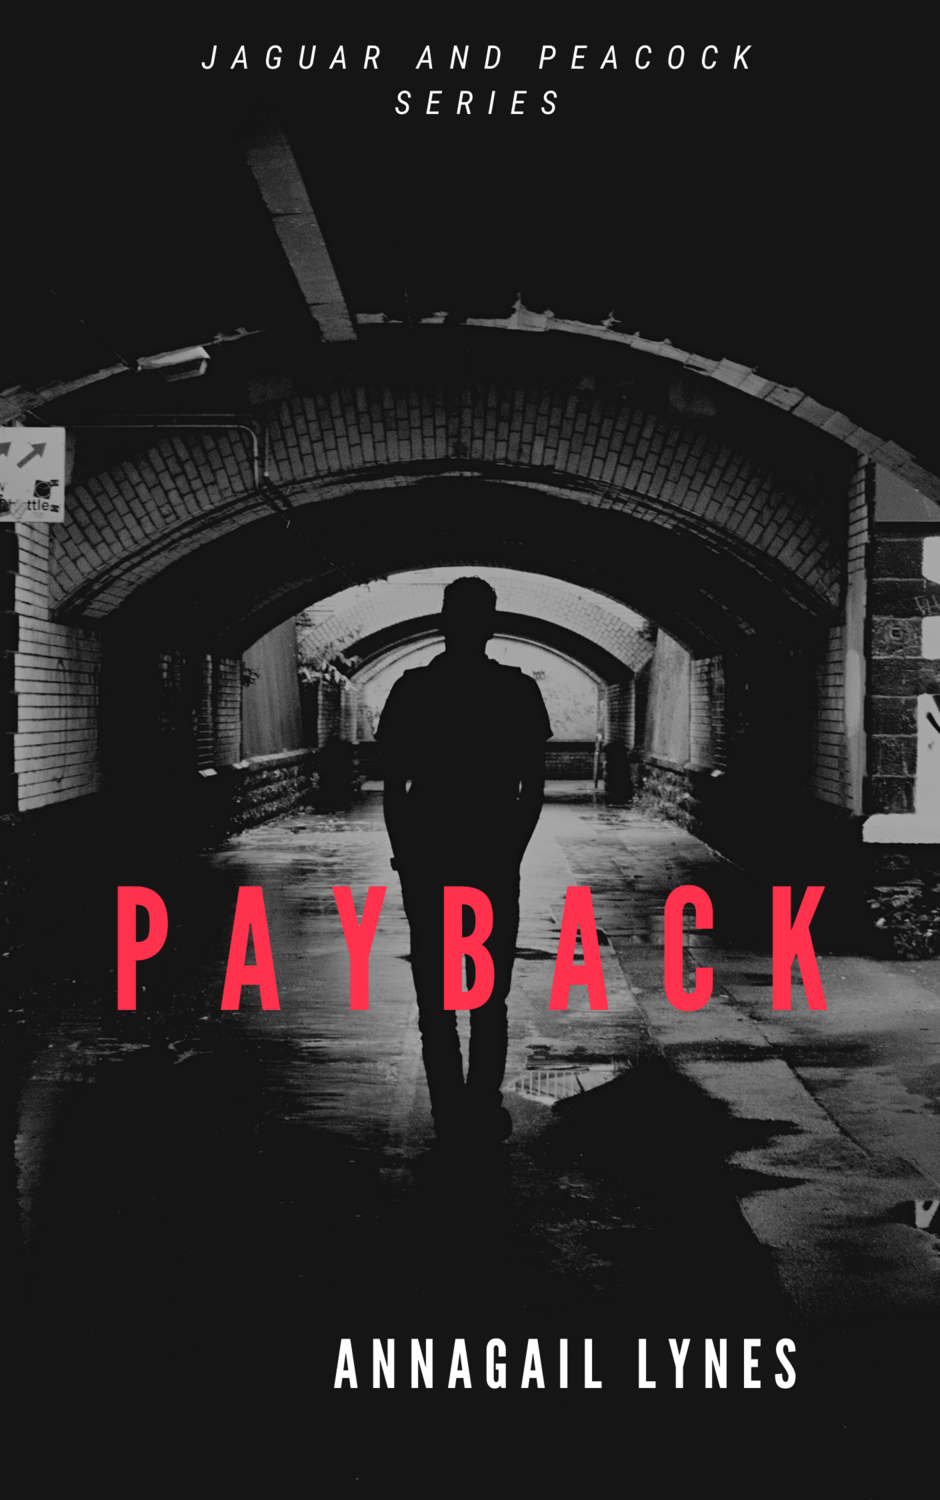 Payback E-Novel (Novel 8 In The Jaguar & Peacock Series)